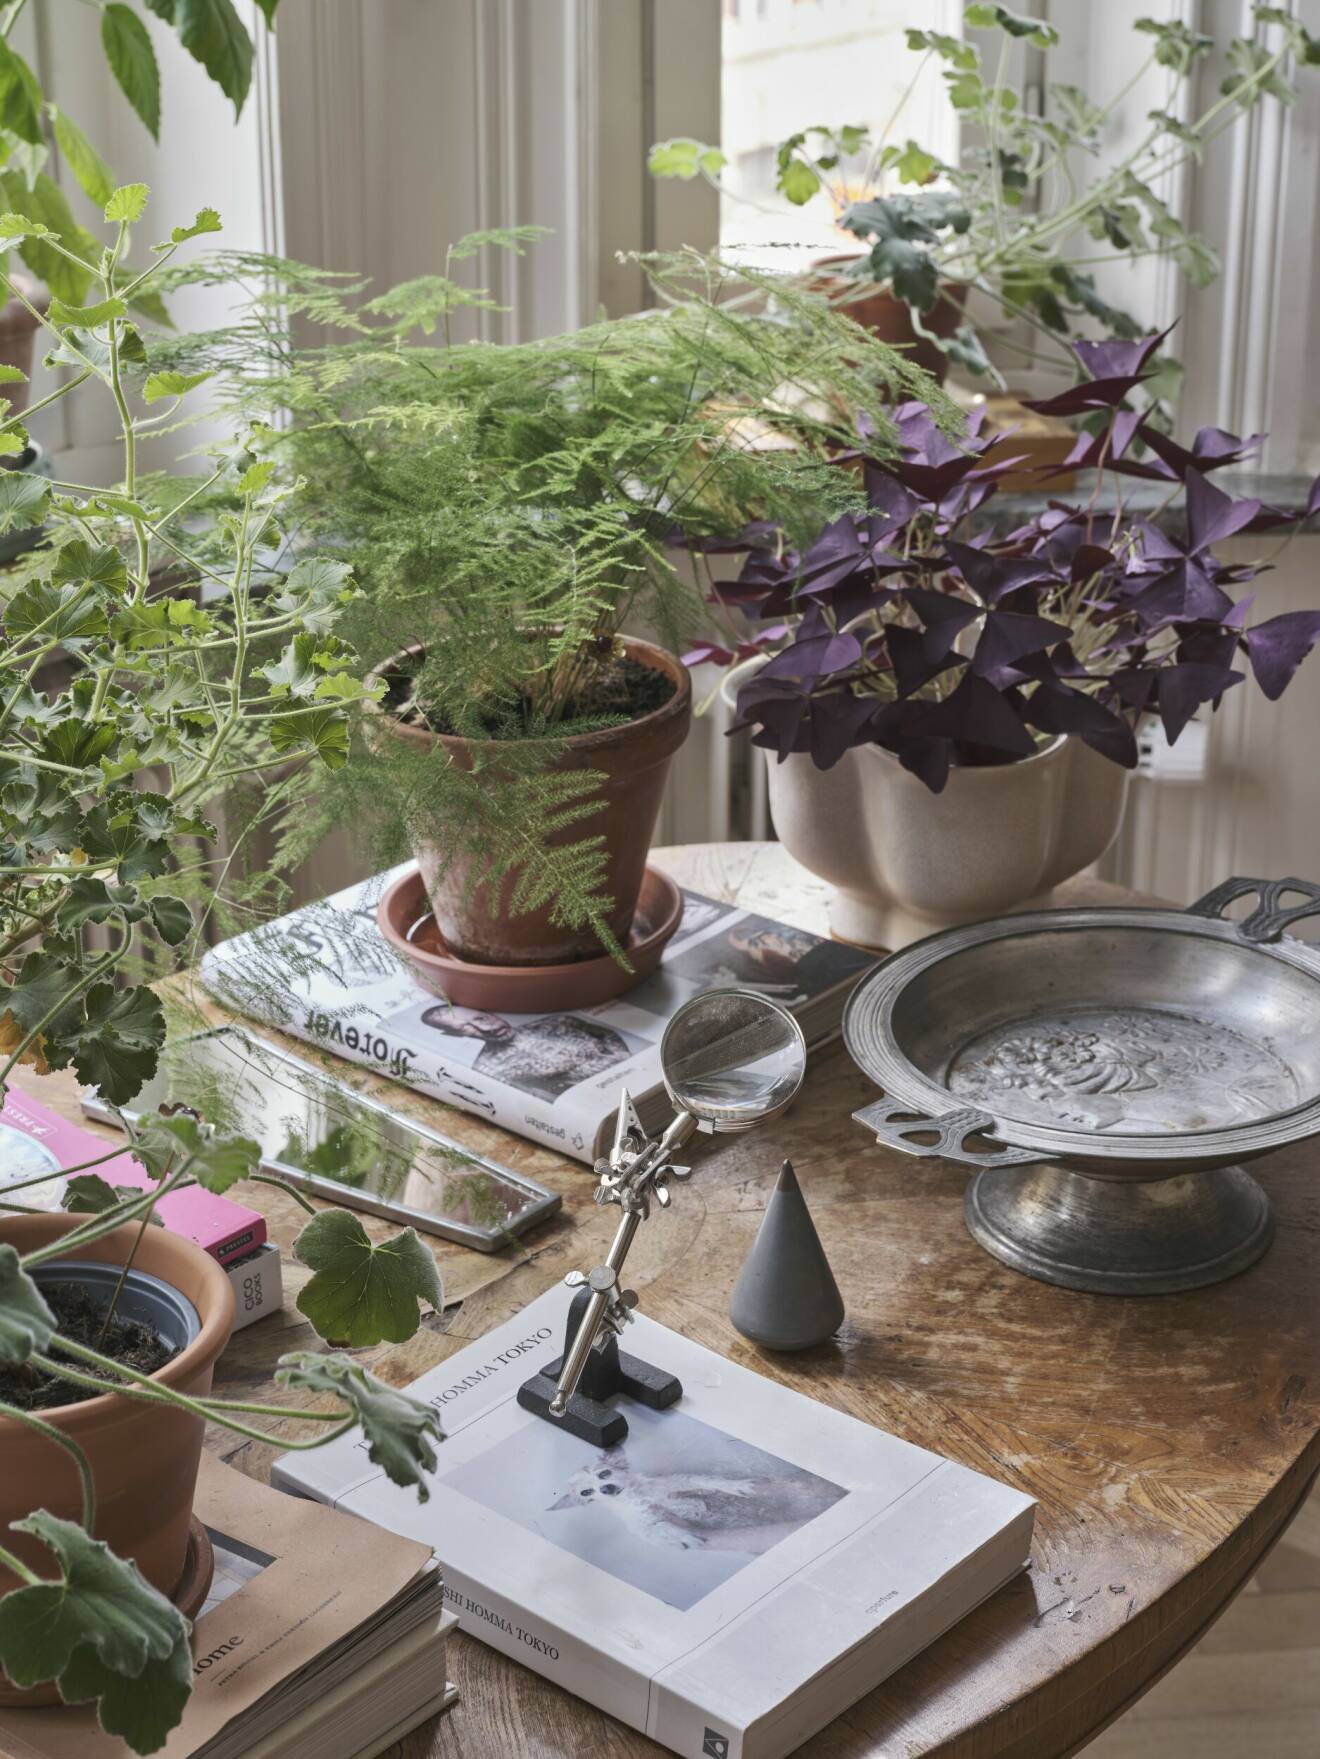 Hemma hos Sofia Wood i Norrköping, växter ger liv åt sovrummet.